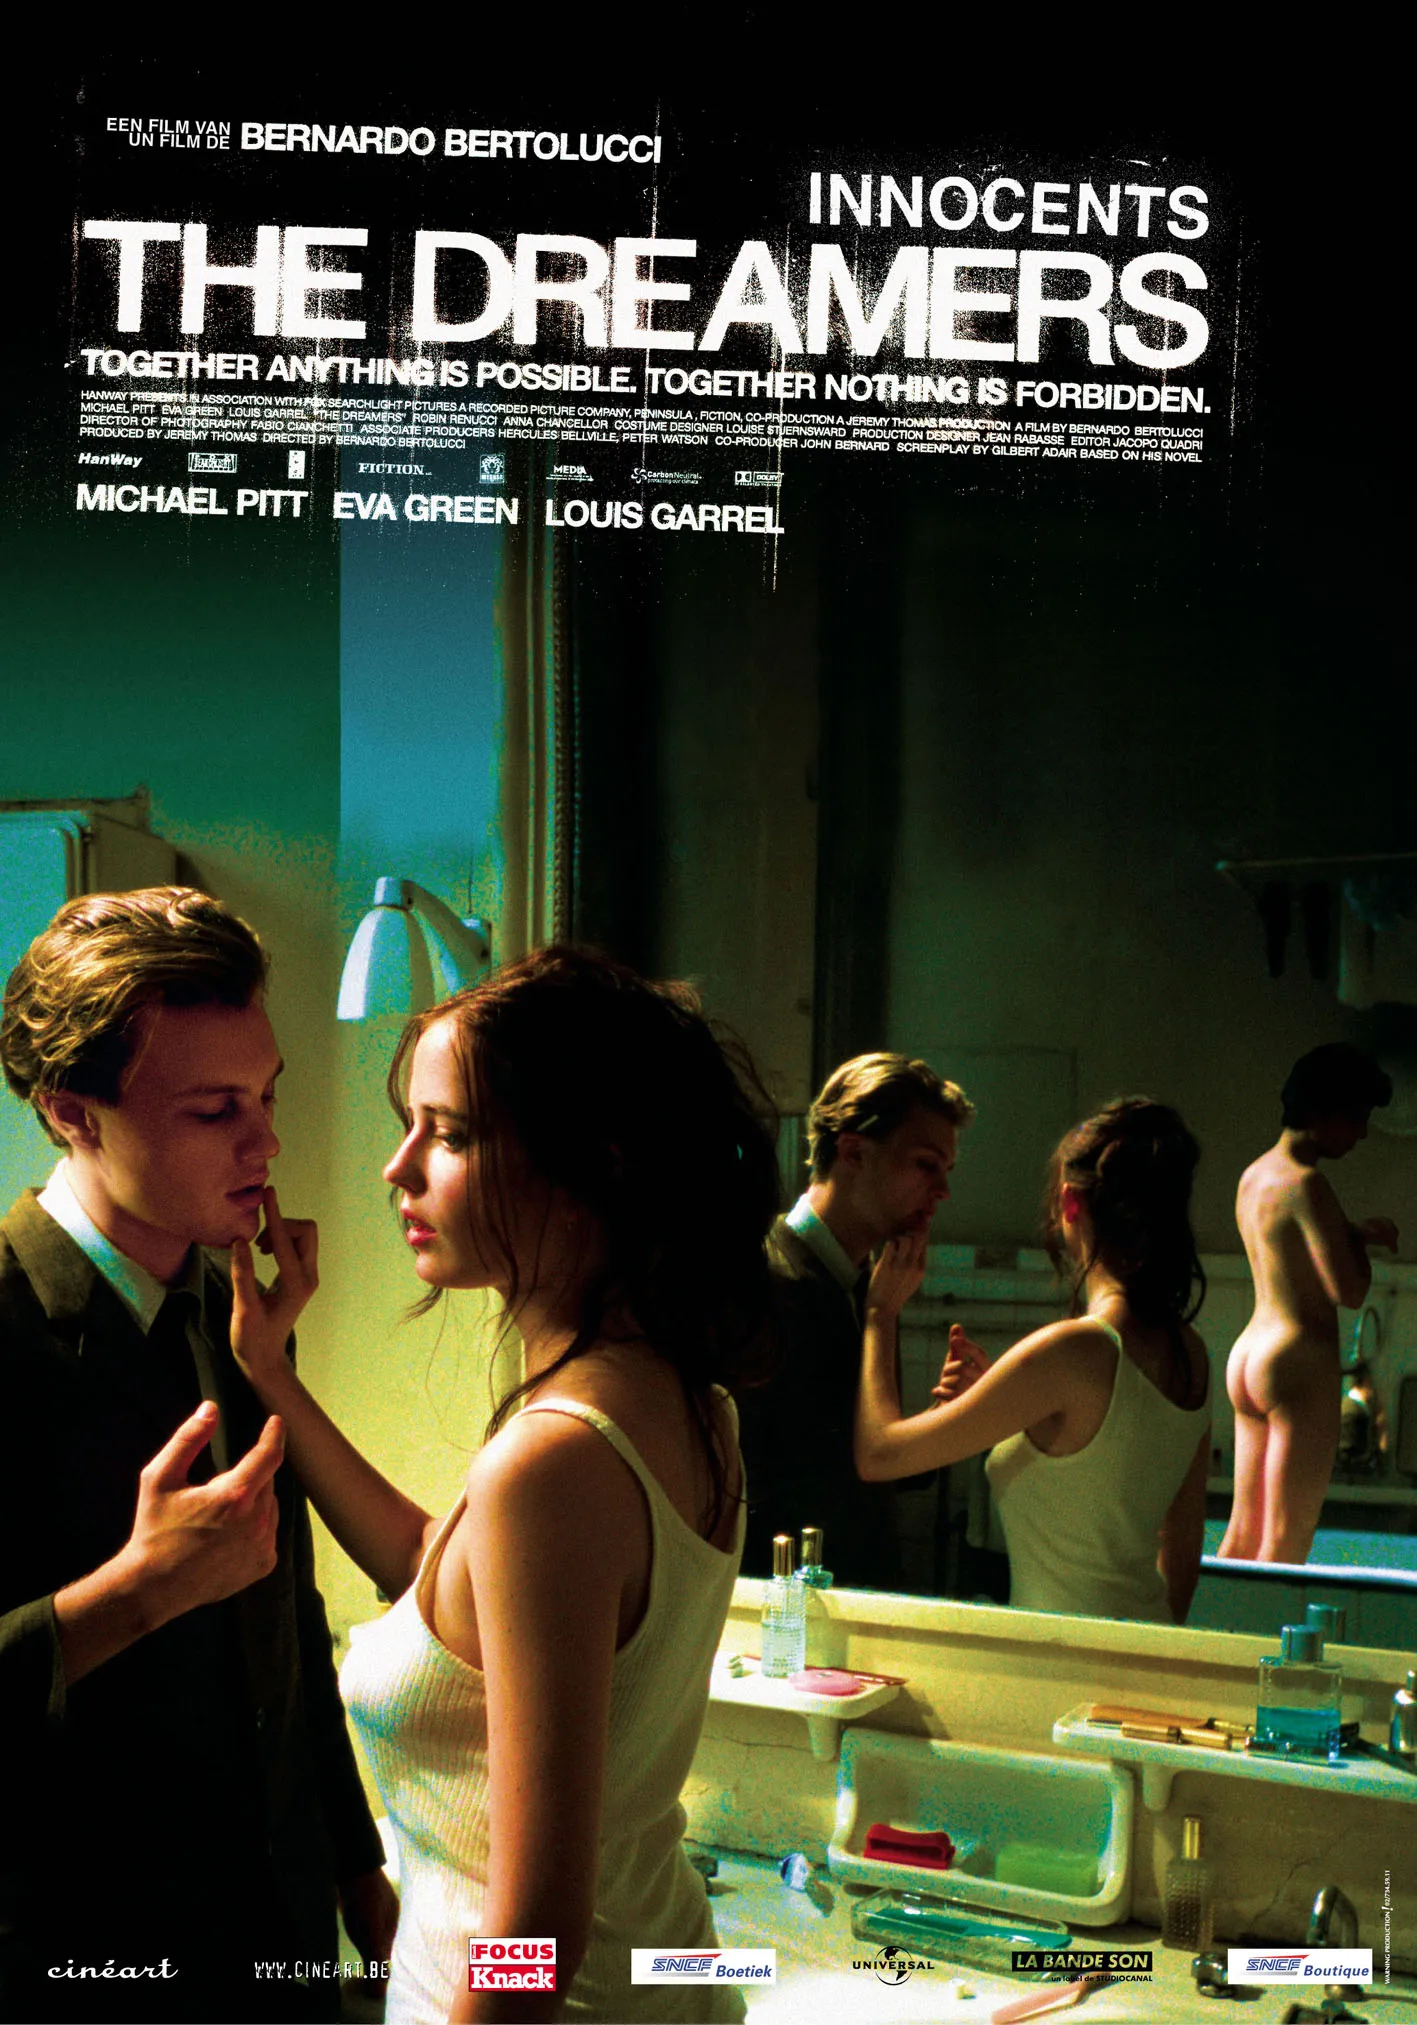 THE DREAMERS Movie Michael Pitt Eva Green Louis Garrel SILK POSTER  Decorative painting - AliExpress